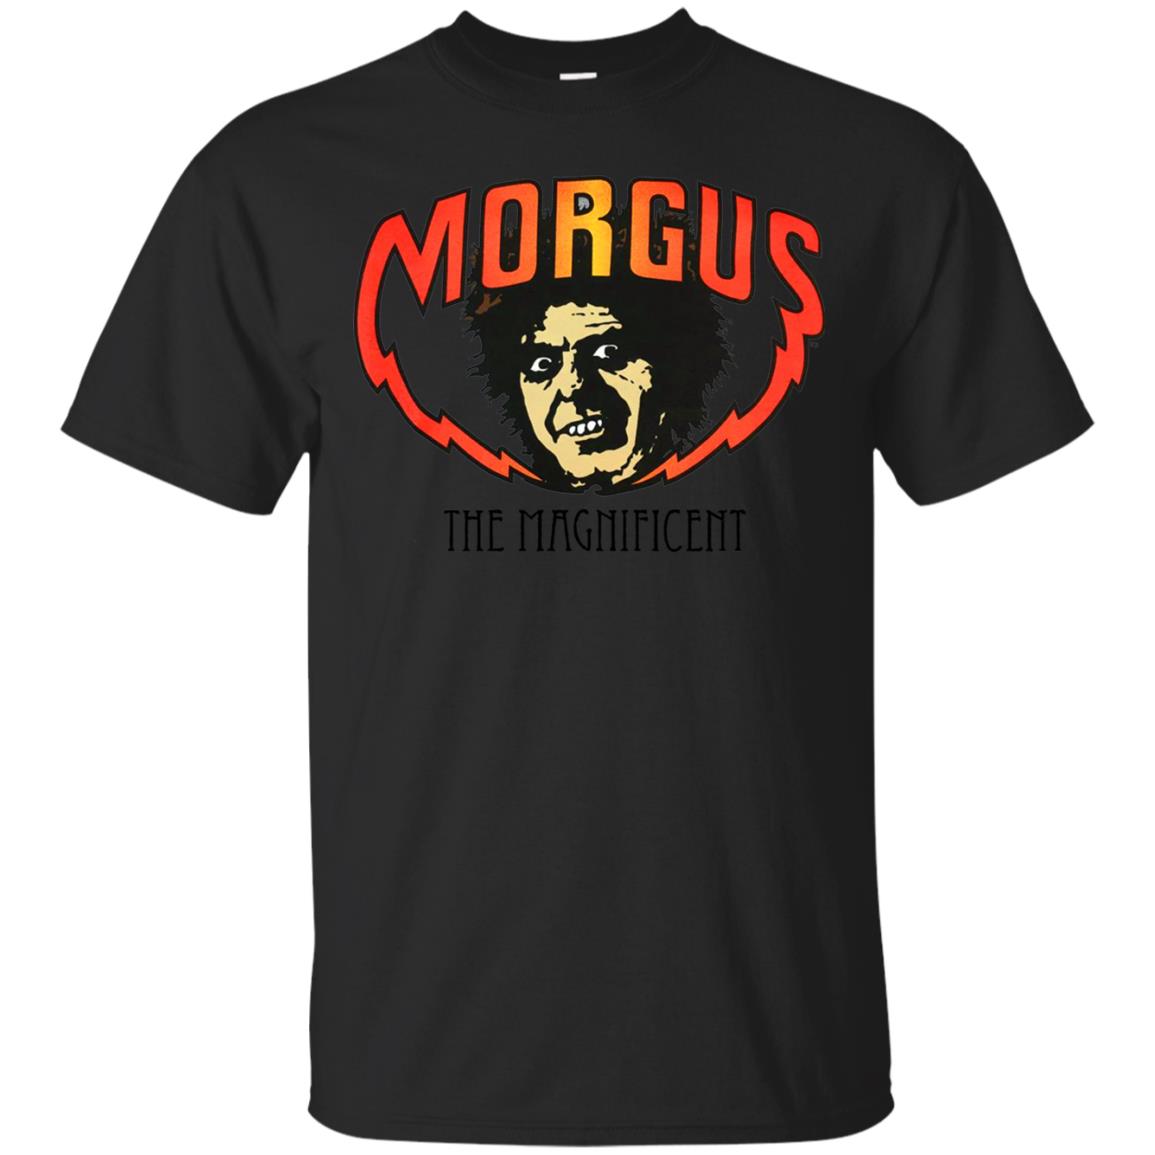 morgus the magnificent t shirt - black